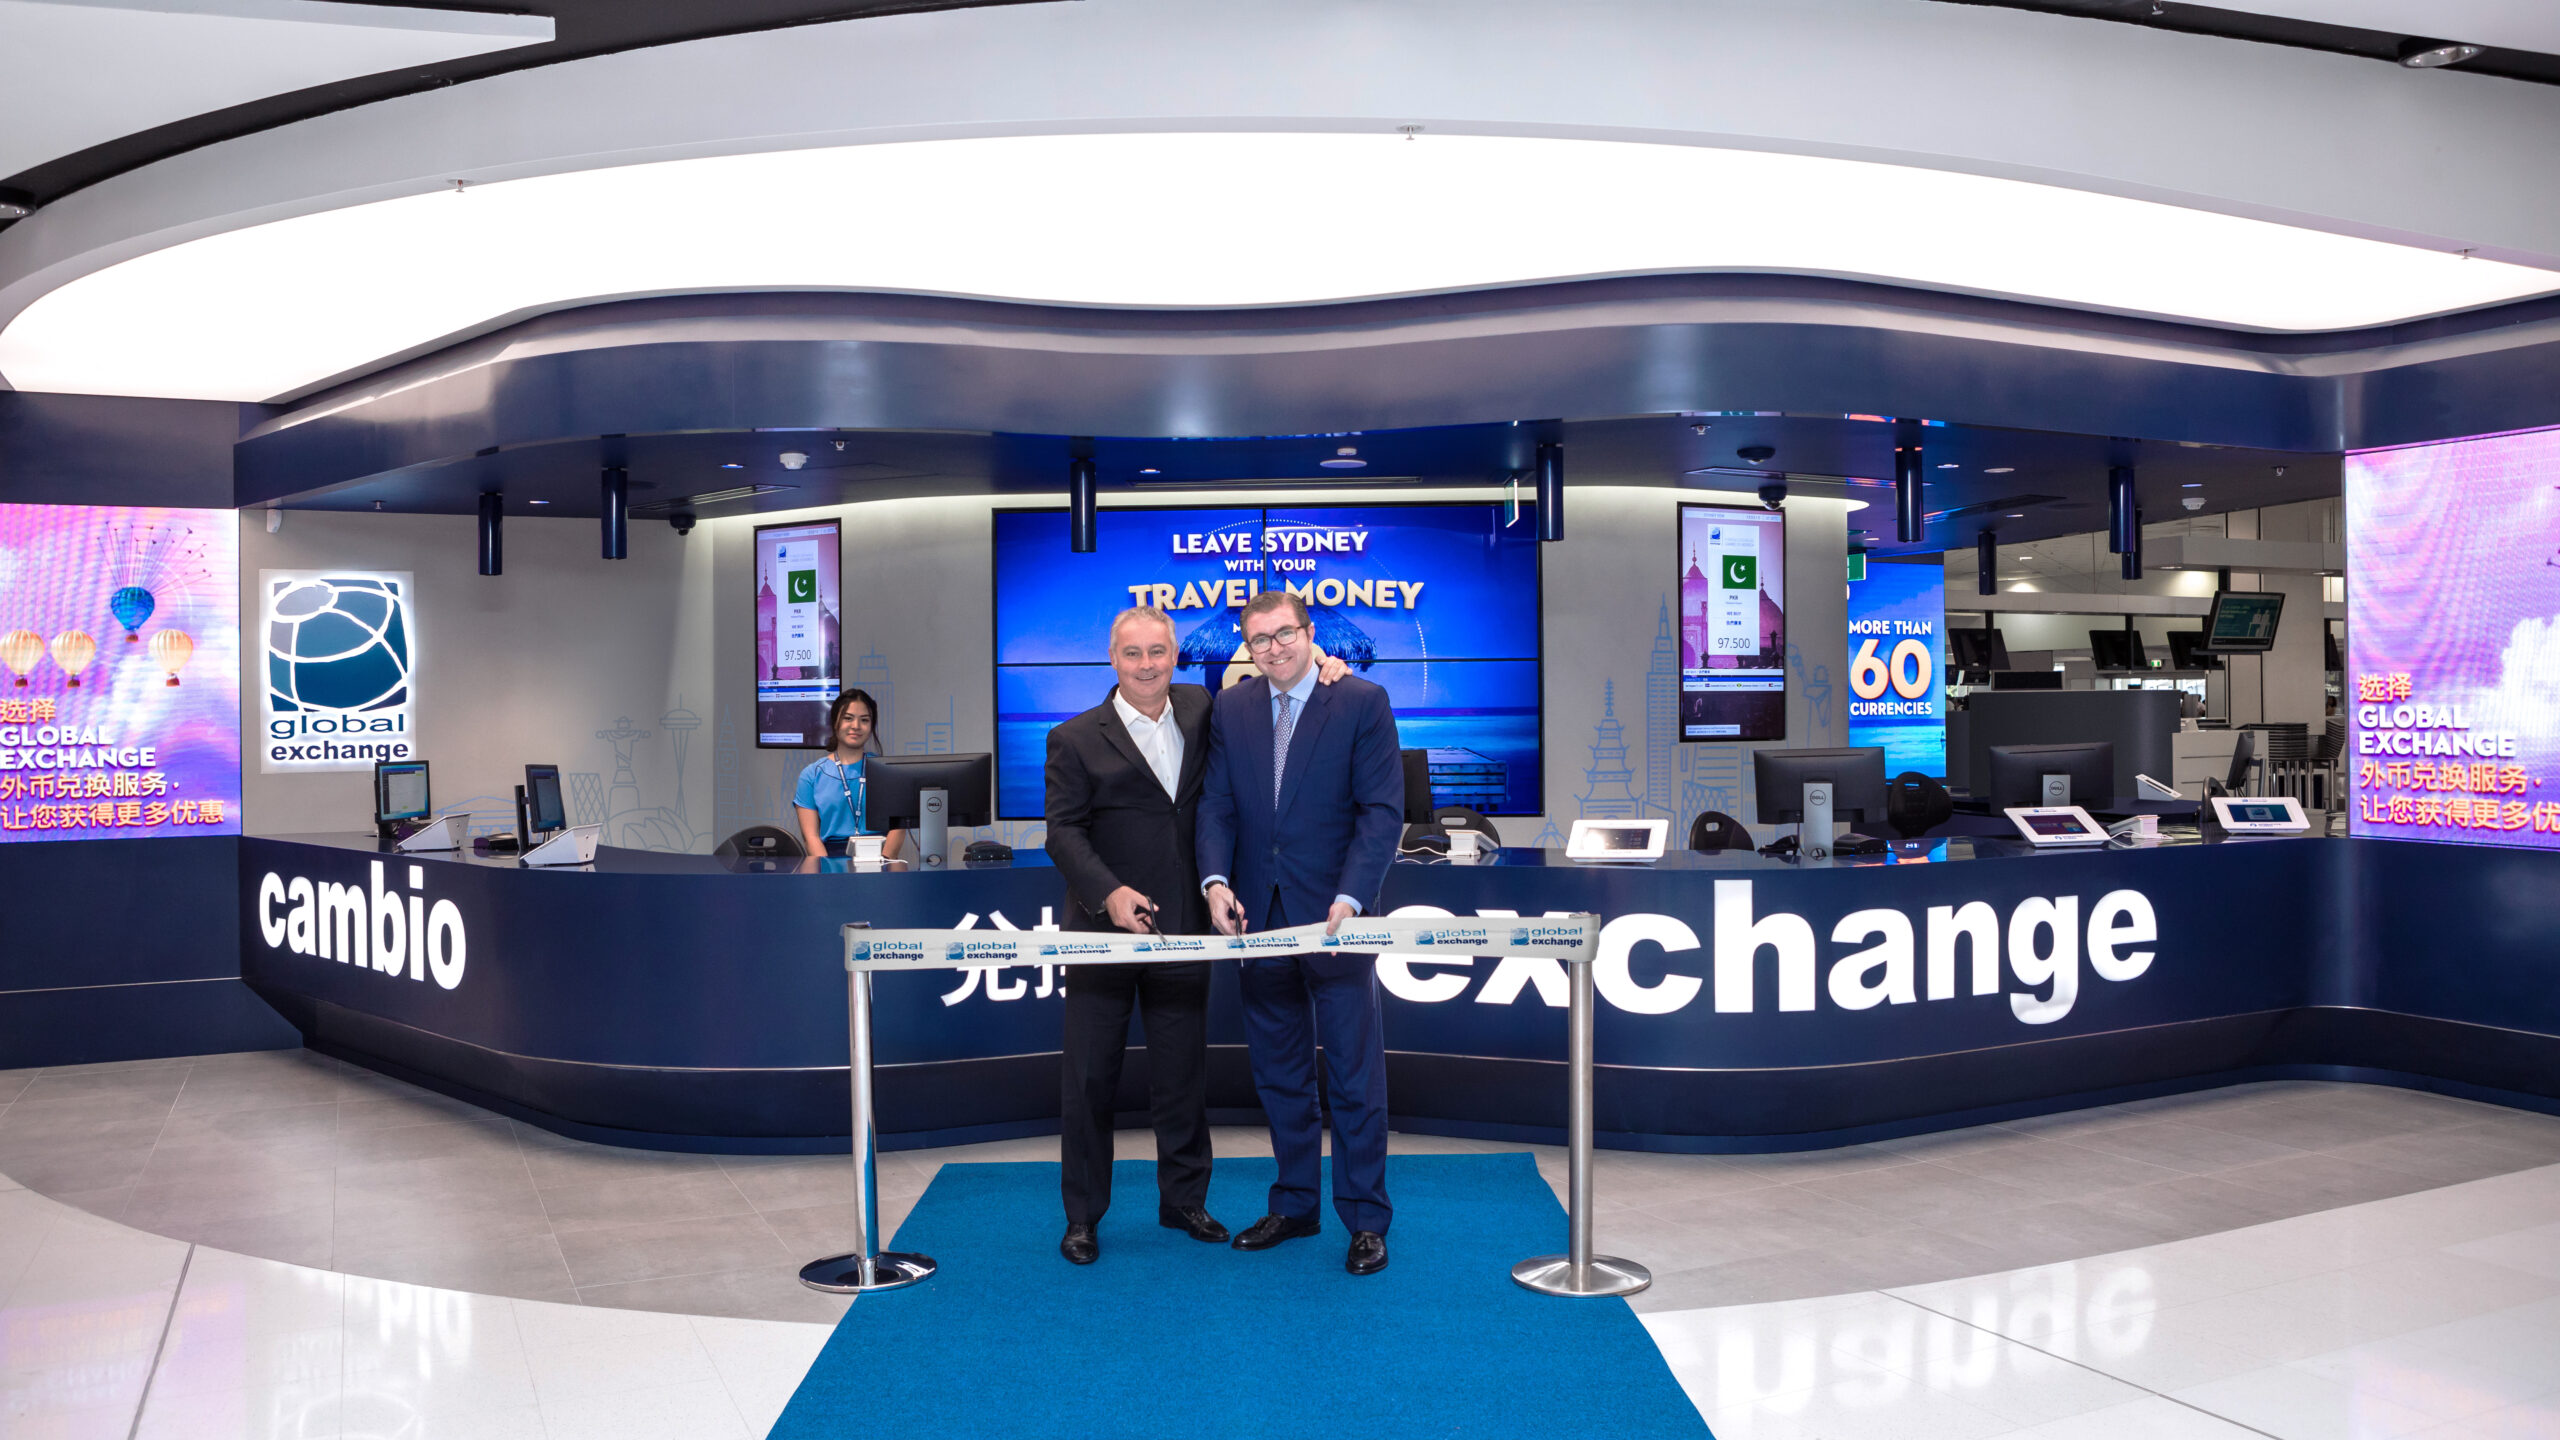 Global Exchange flagship bureax unveiled at Sydney Airport